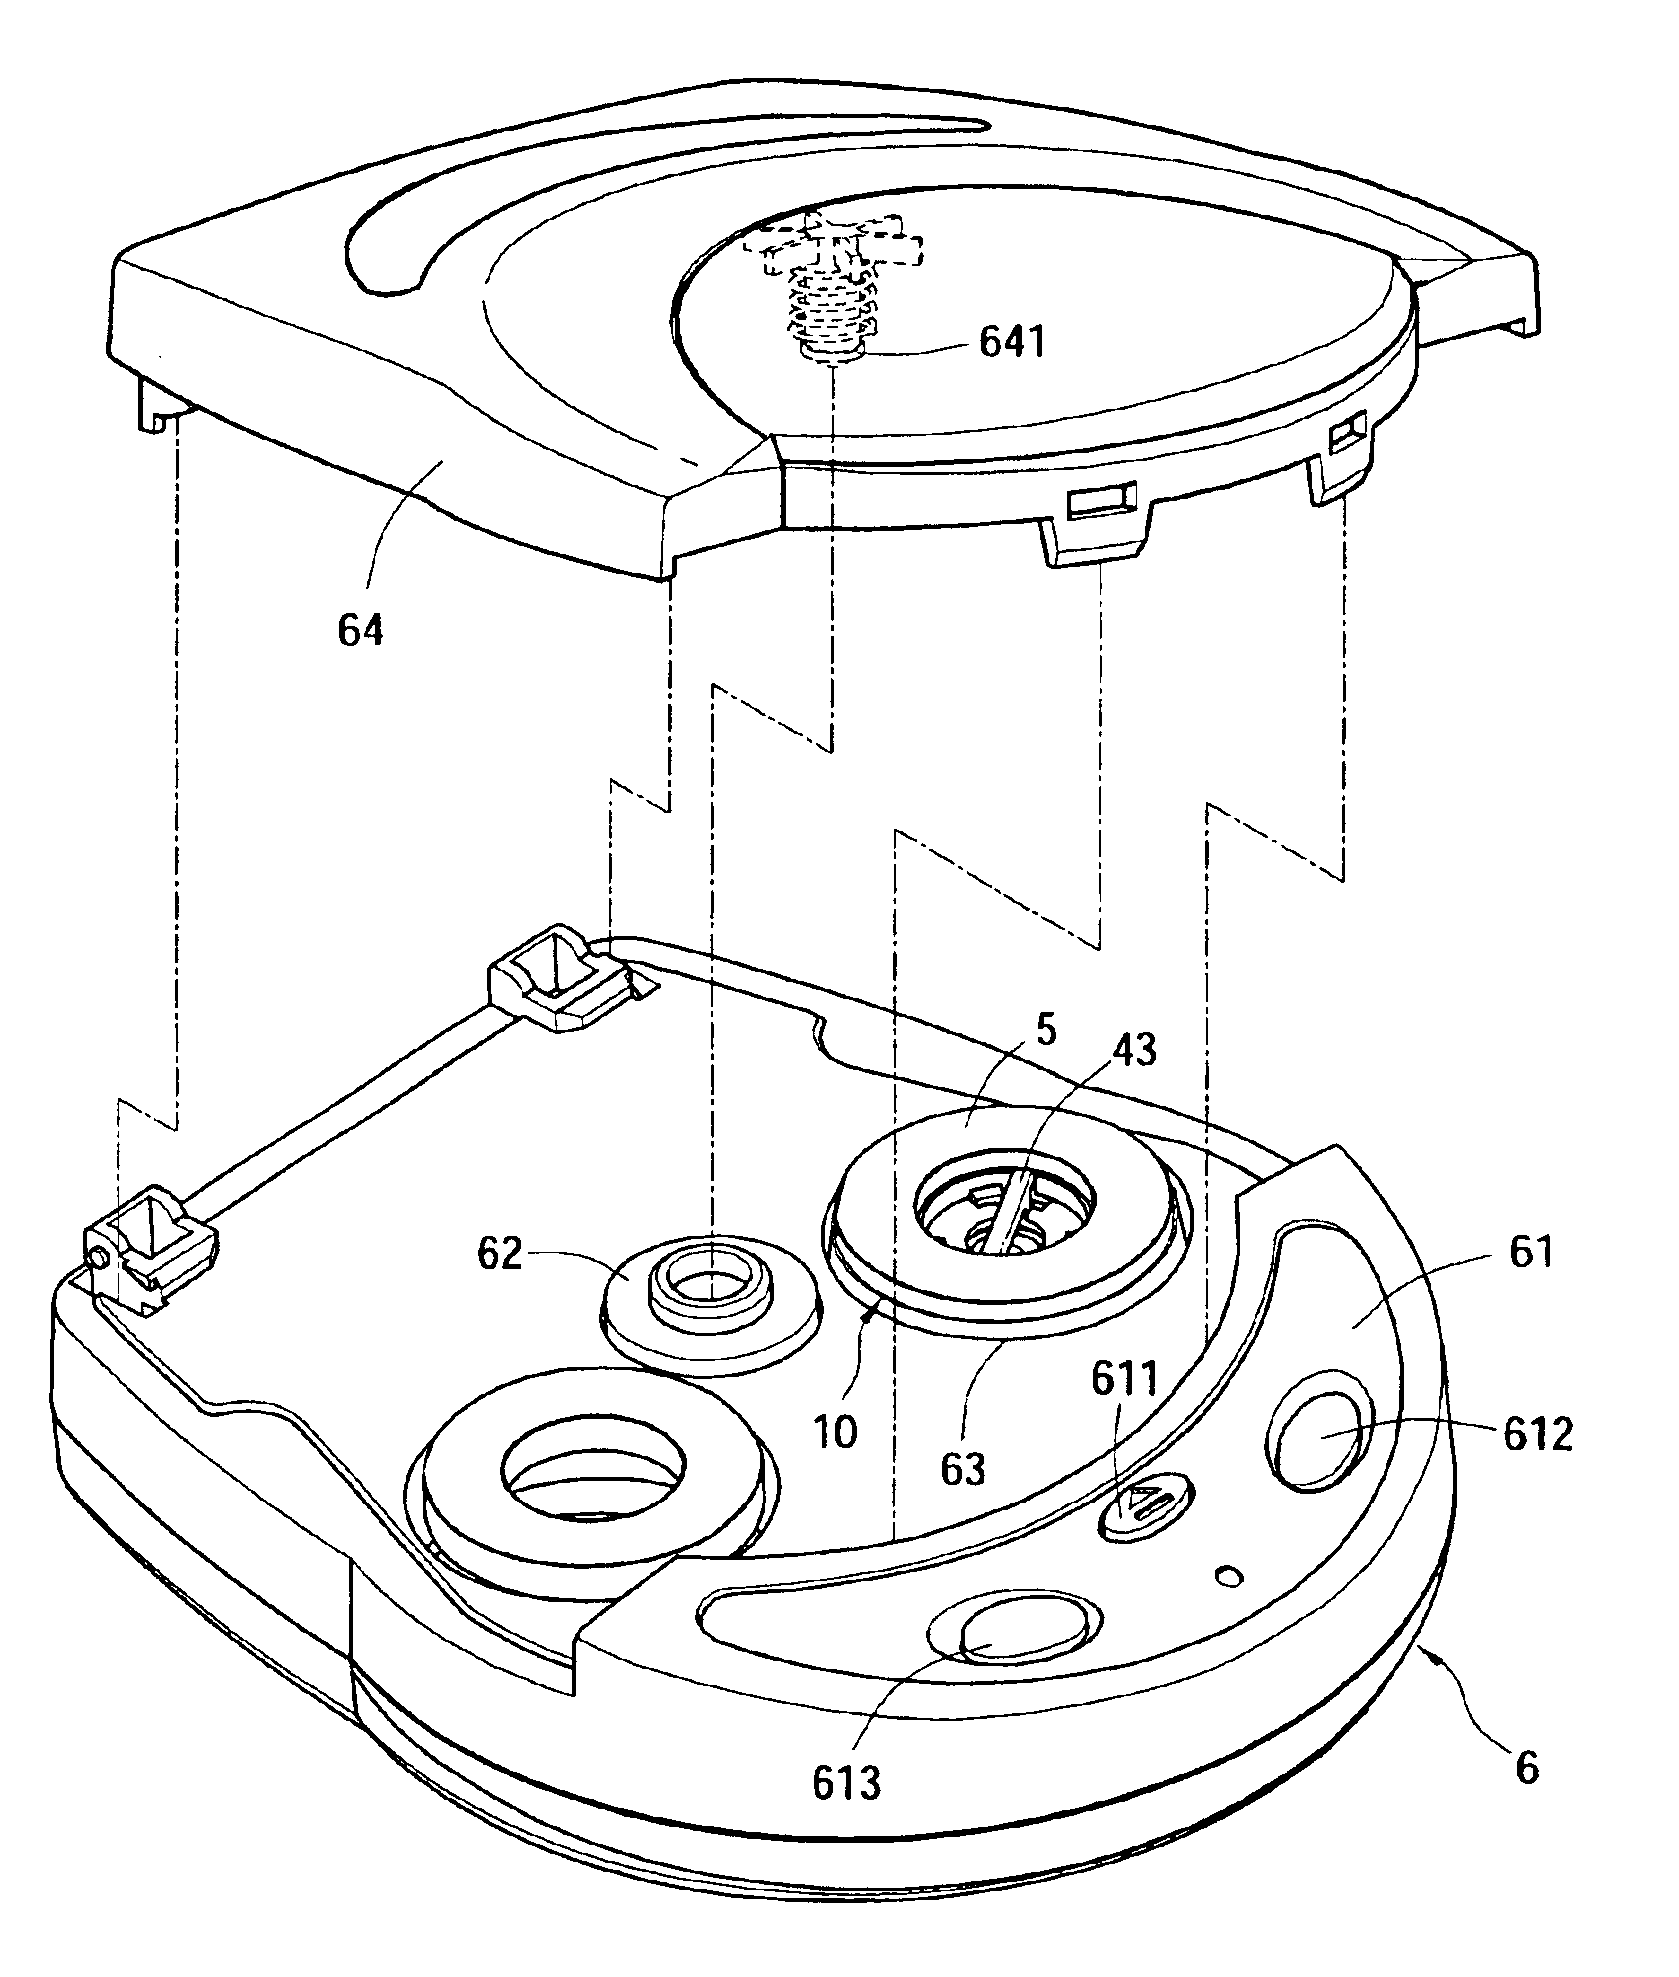 Optical disc repairing device